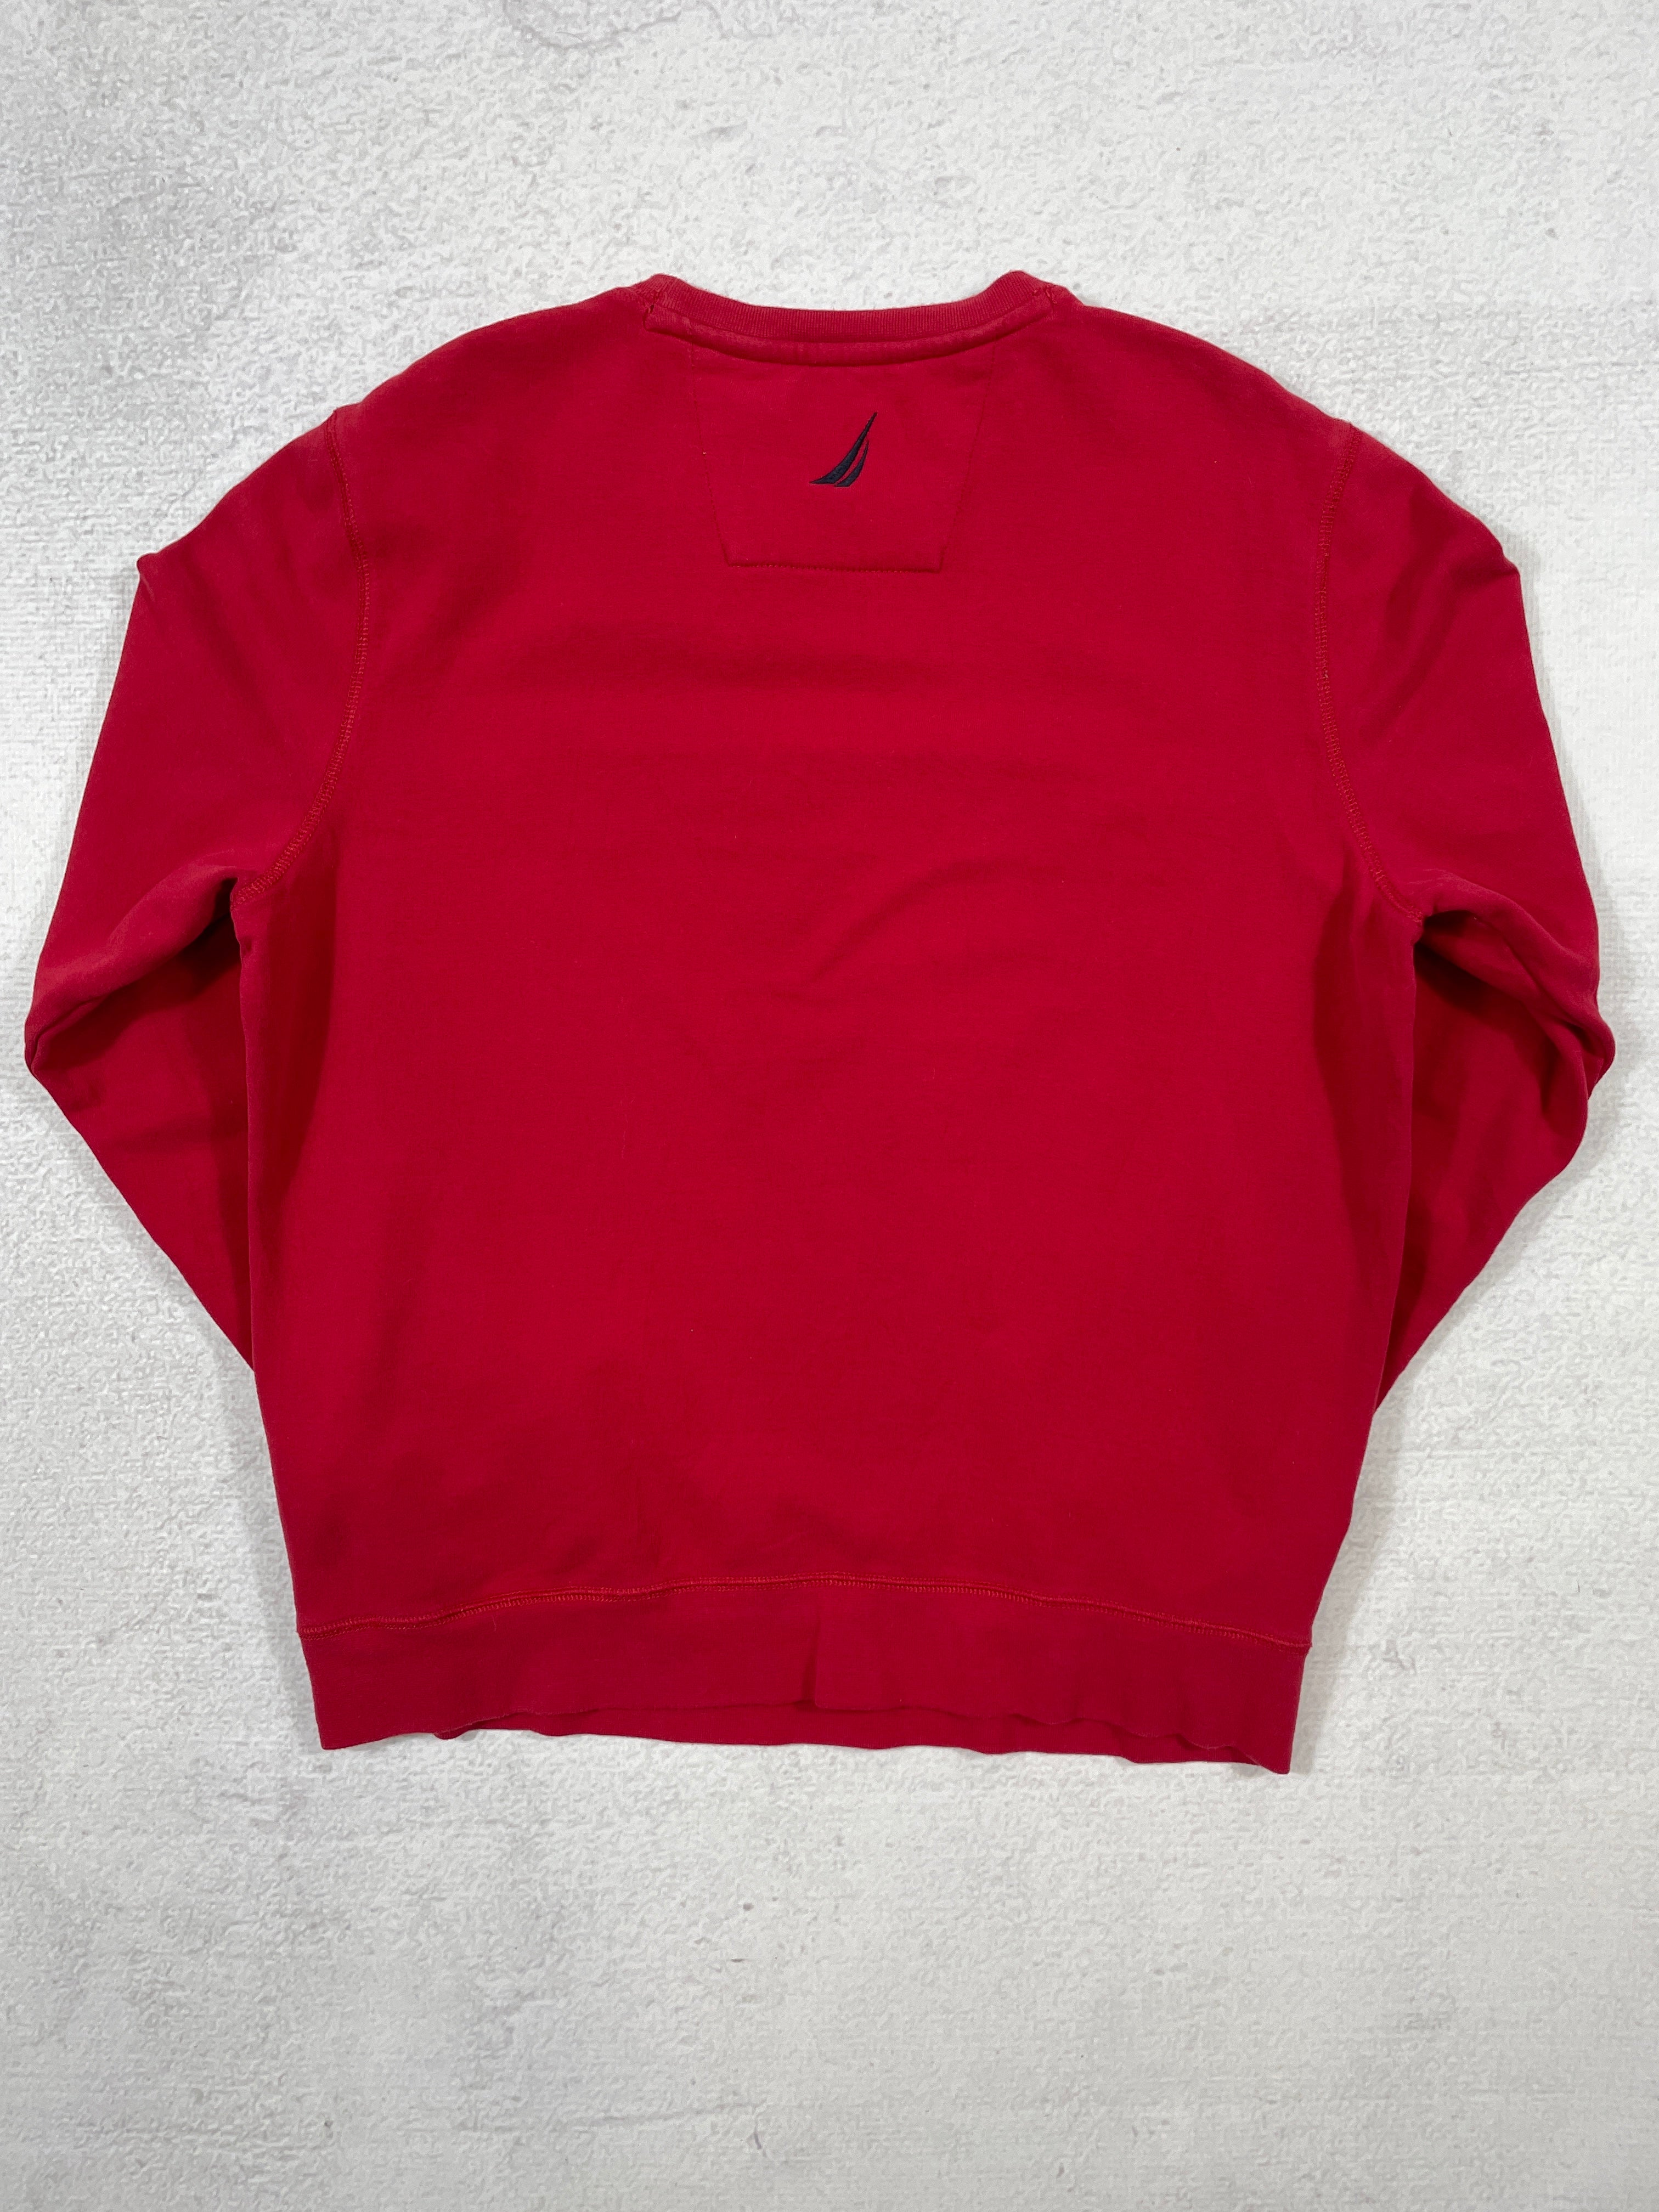 Vintage Nautica Crewneck Sweatshirt - Men's Small